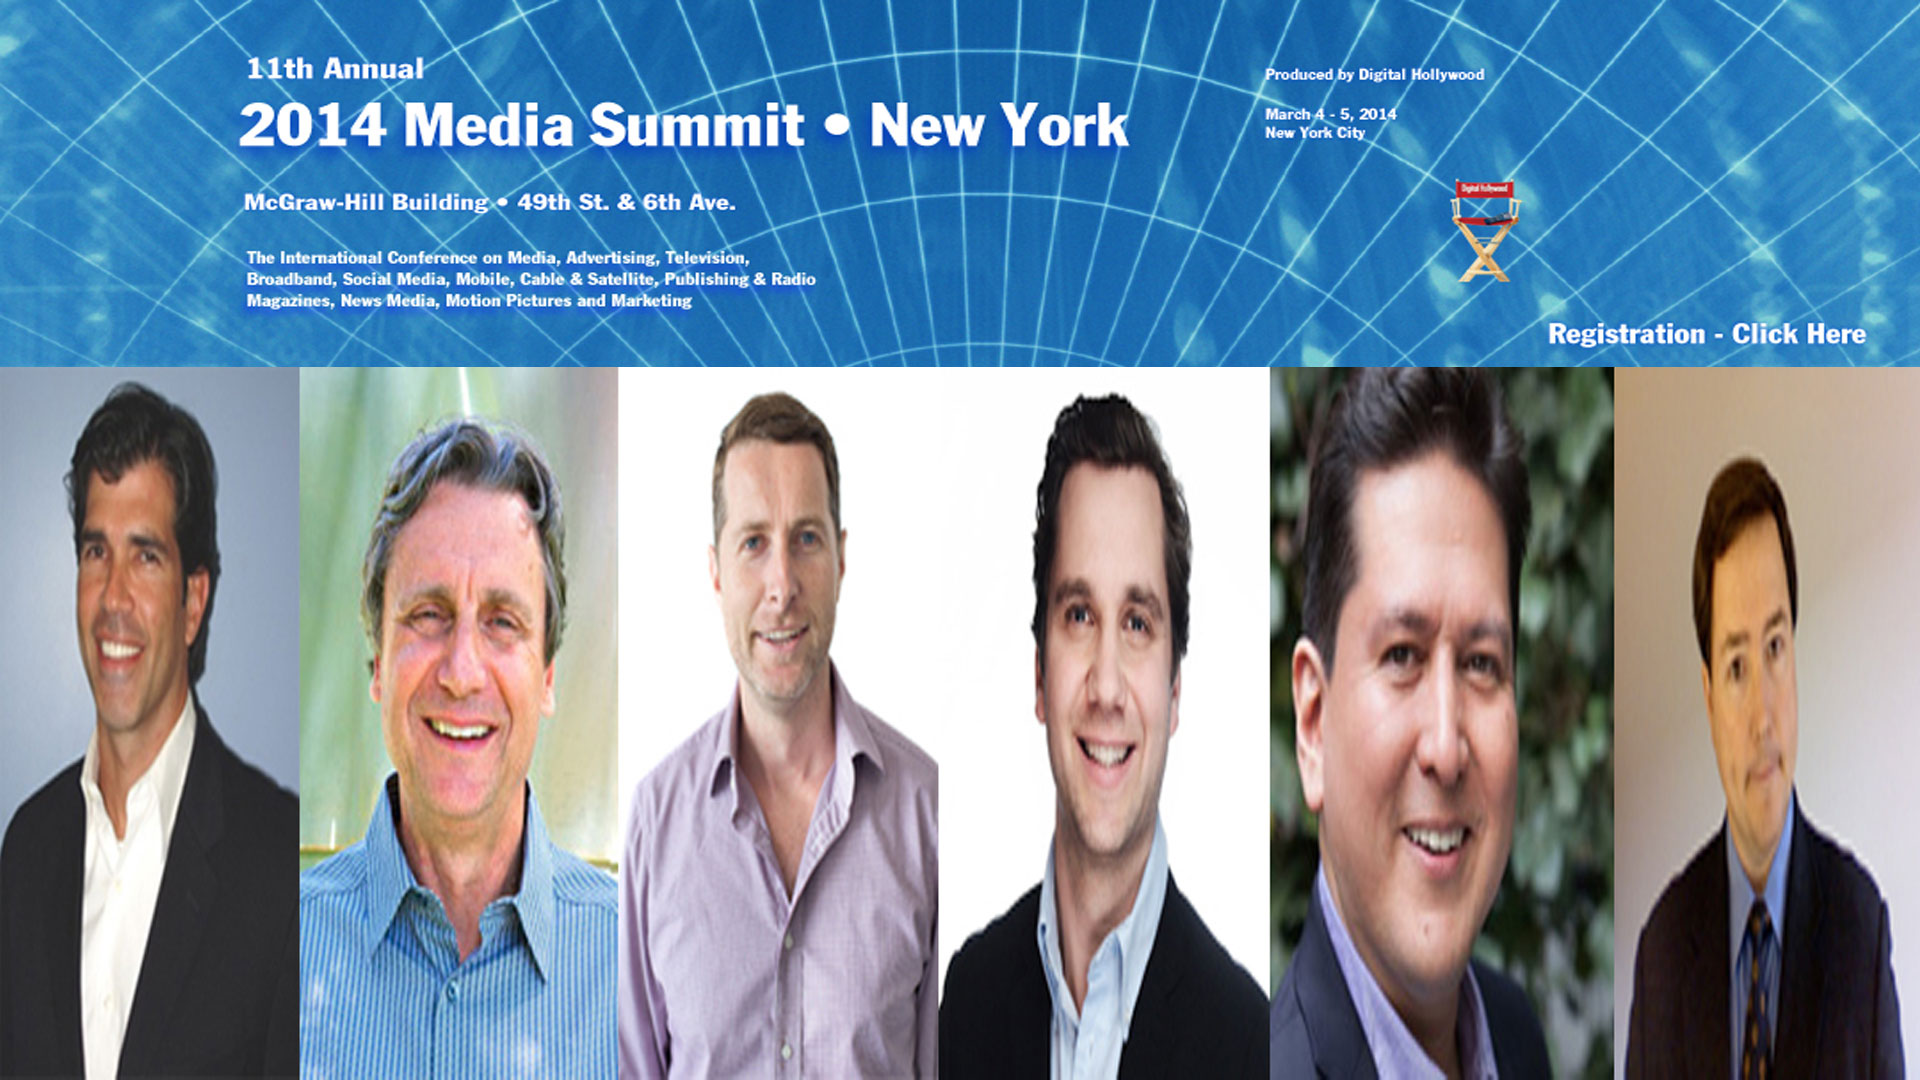 digital_hollywood_media_summit_1